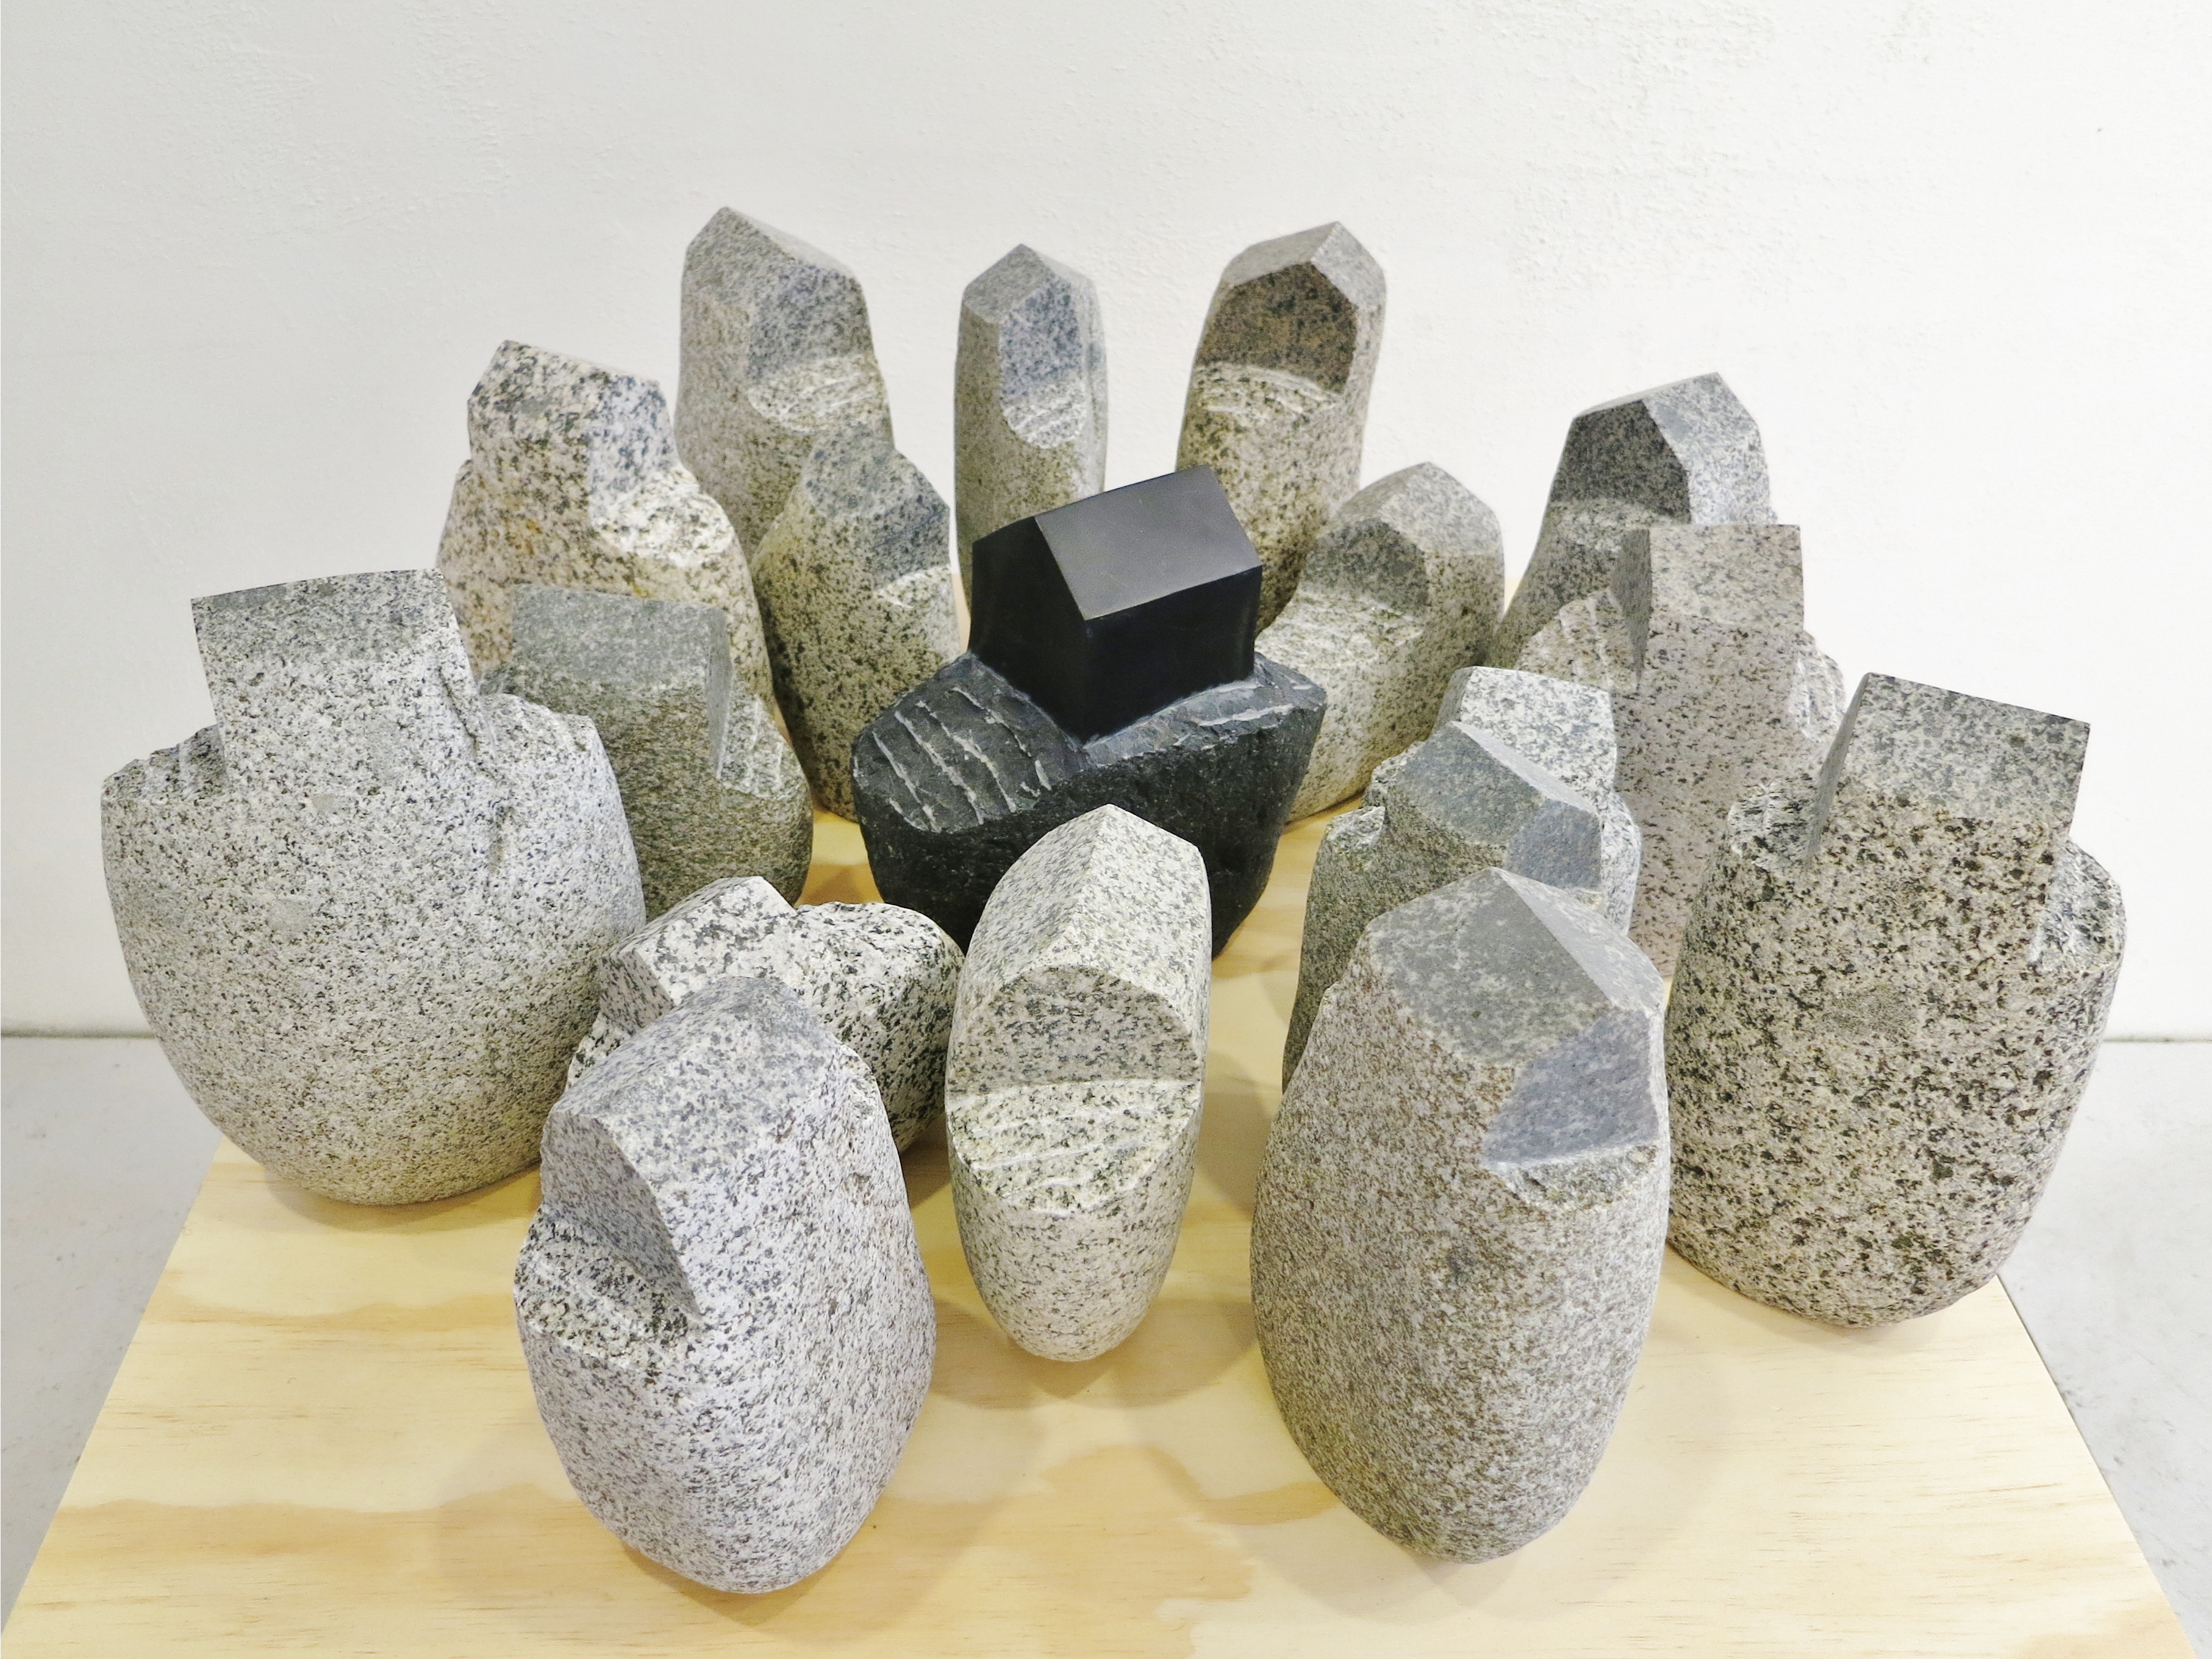 Alone Together. Granite and Basalt River Stones, 11” H x 24” W x 24” L, Bob :everich